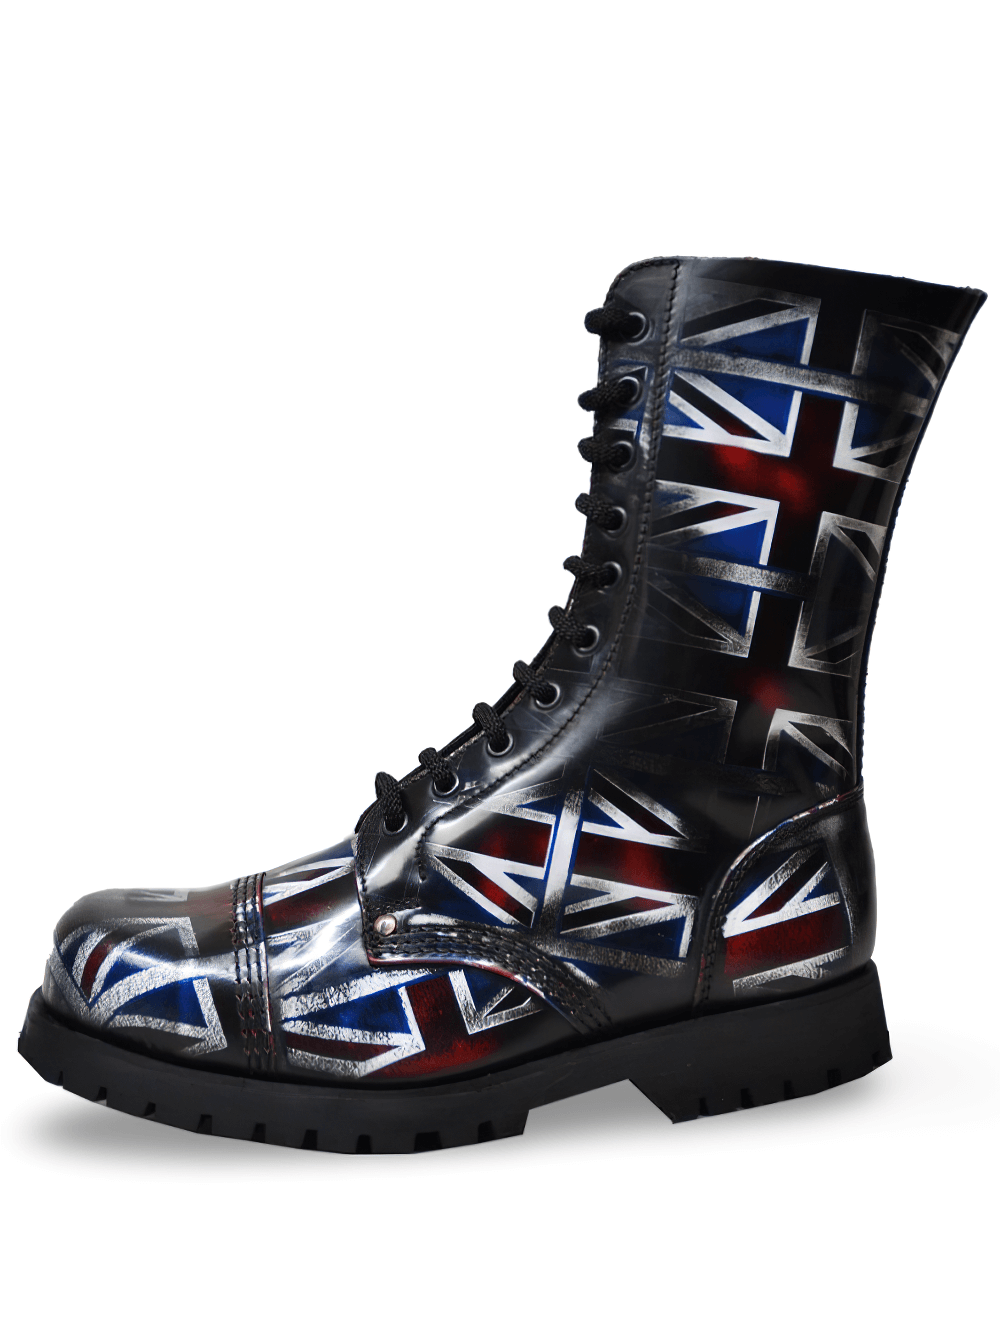 Union Jack 10-Eyelet Ranger Boots with Steel Toe